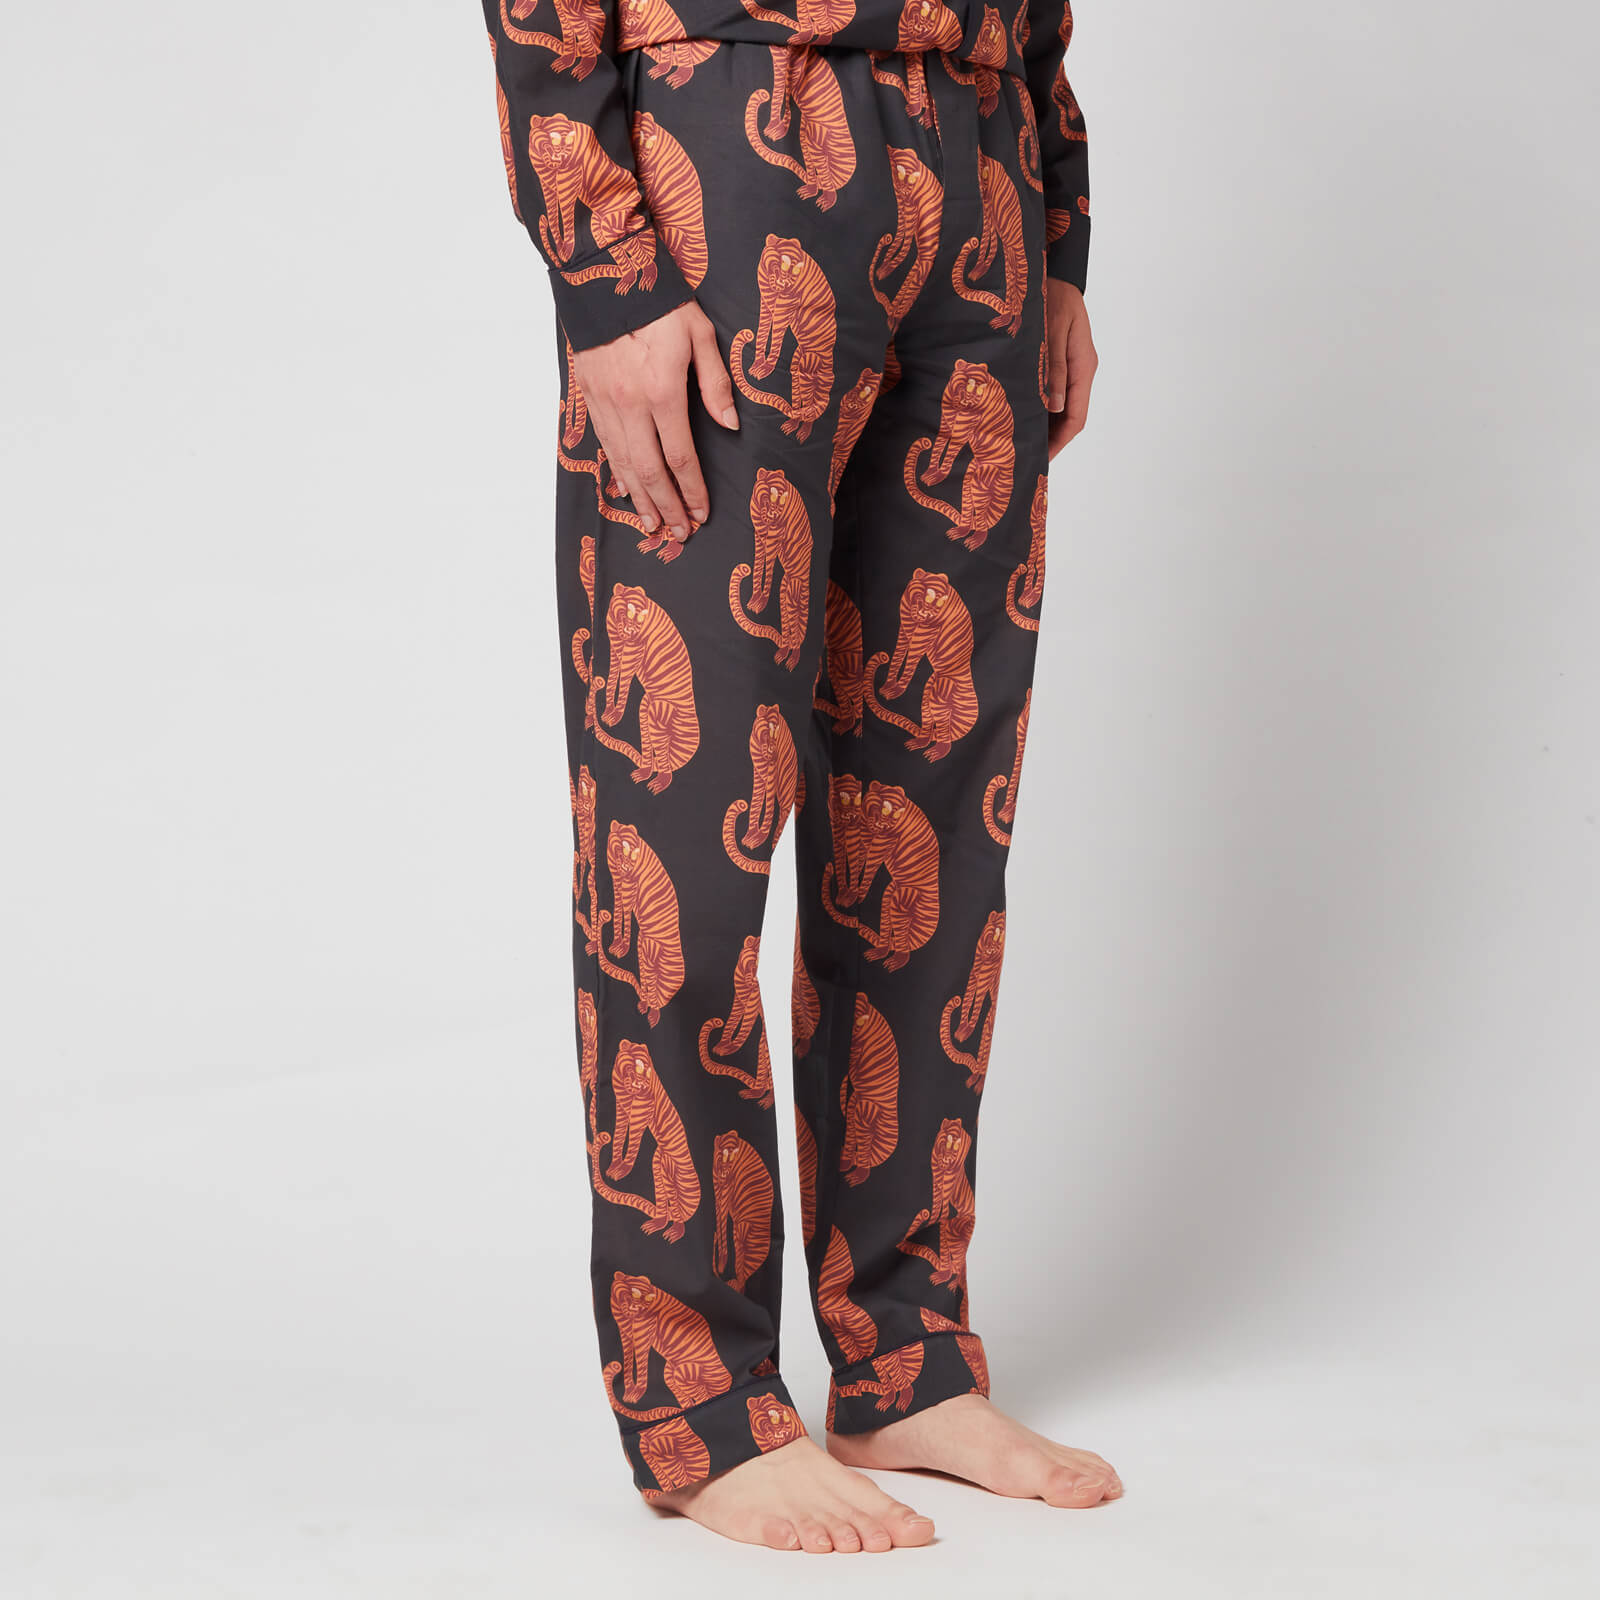 Desmond & Dempsey Men's Tiger Print Trousers - Black/Orange - S